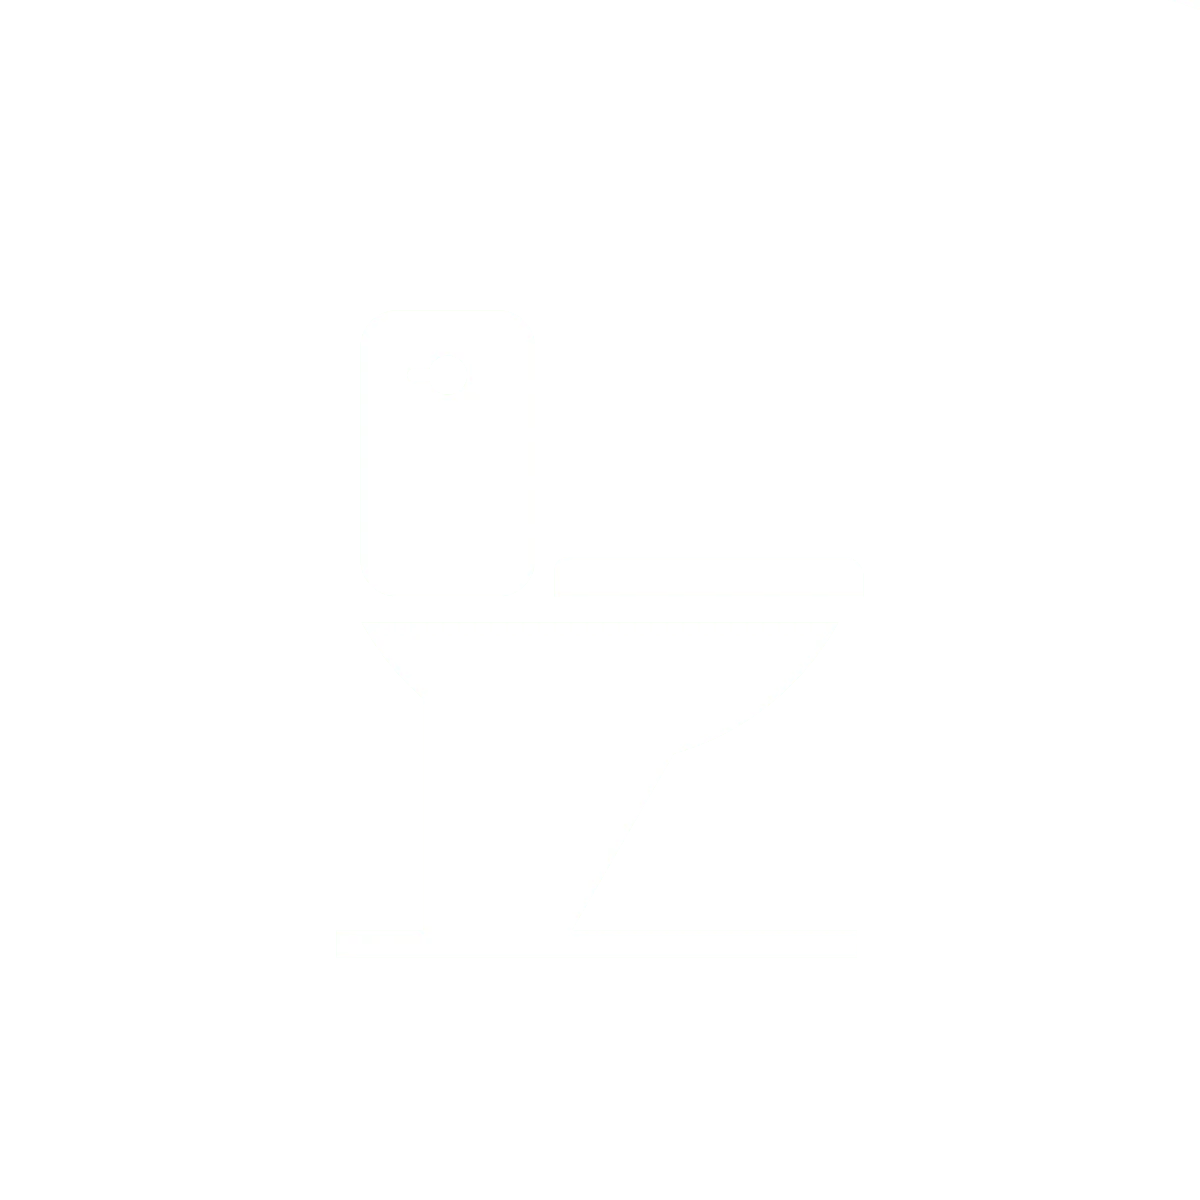 Duplo acionamento no vaso sanitário